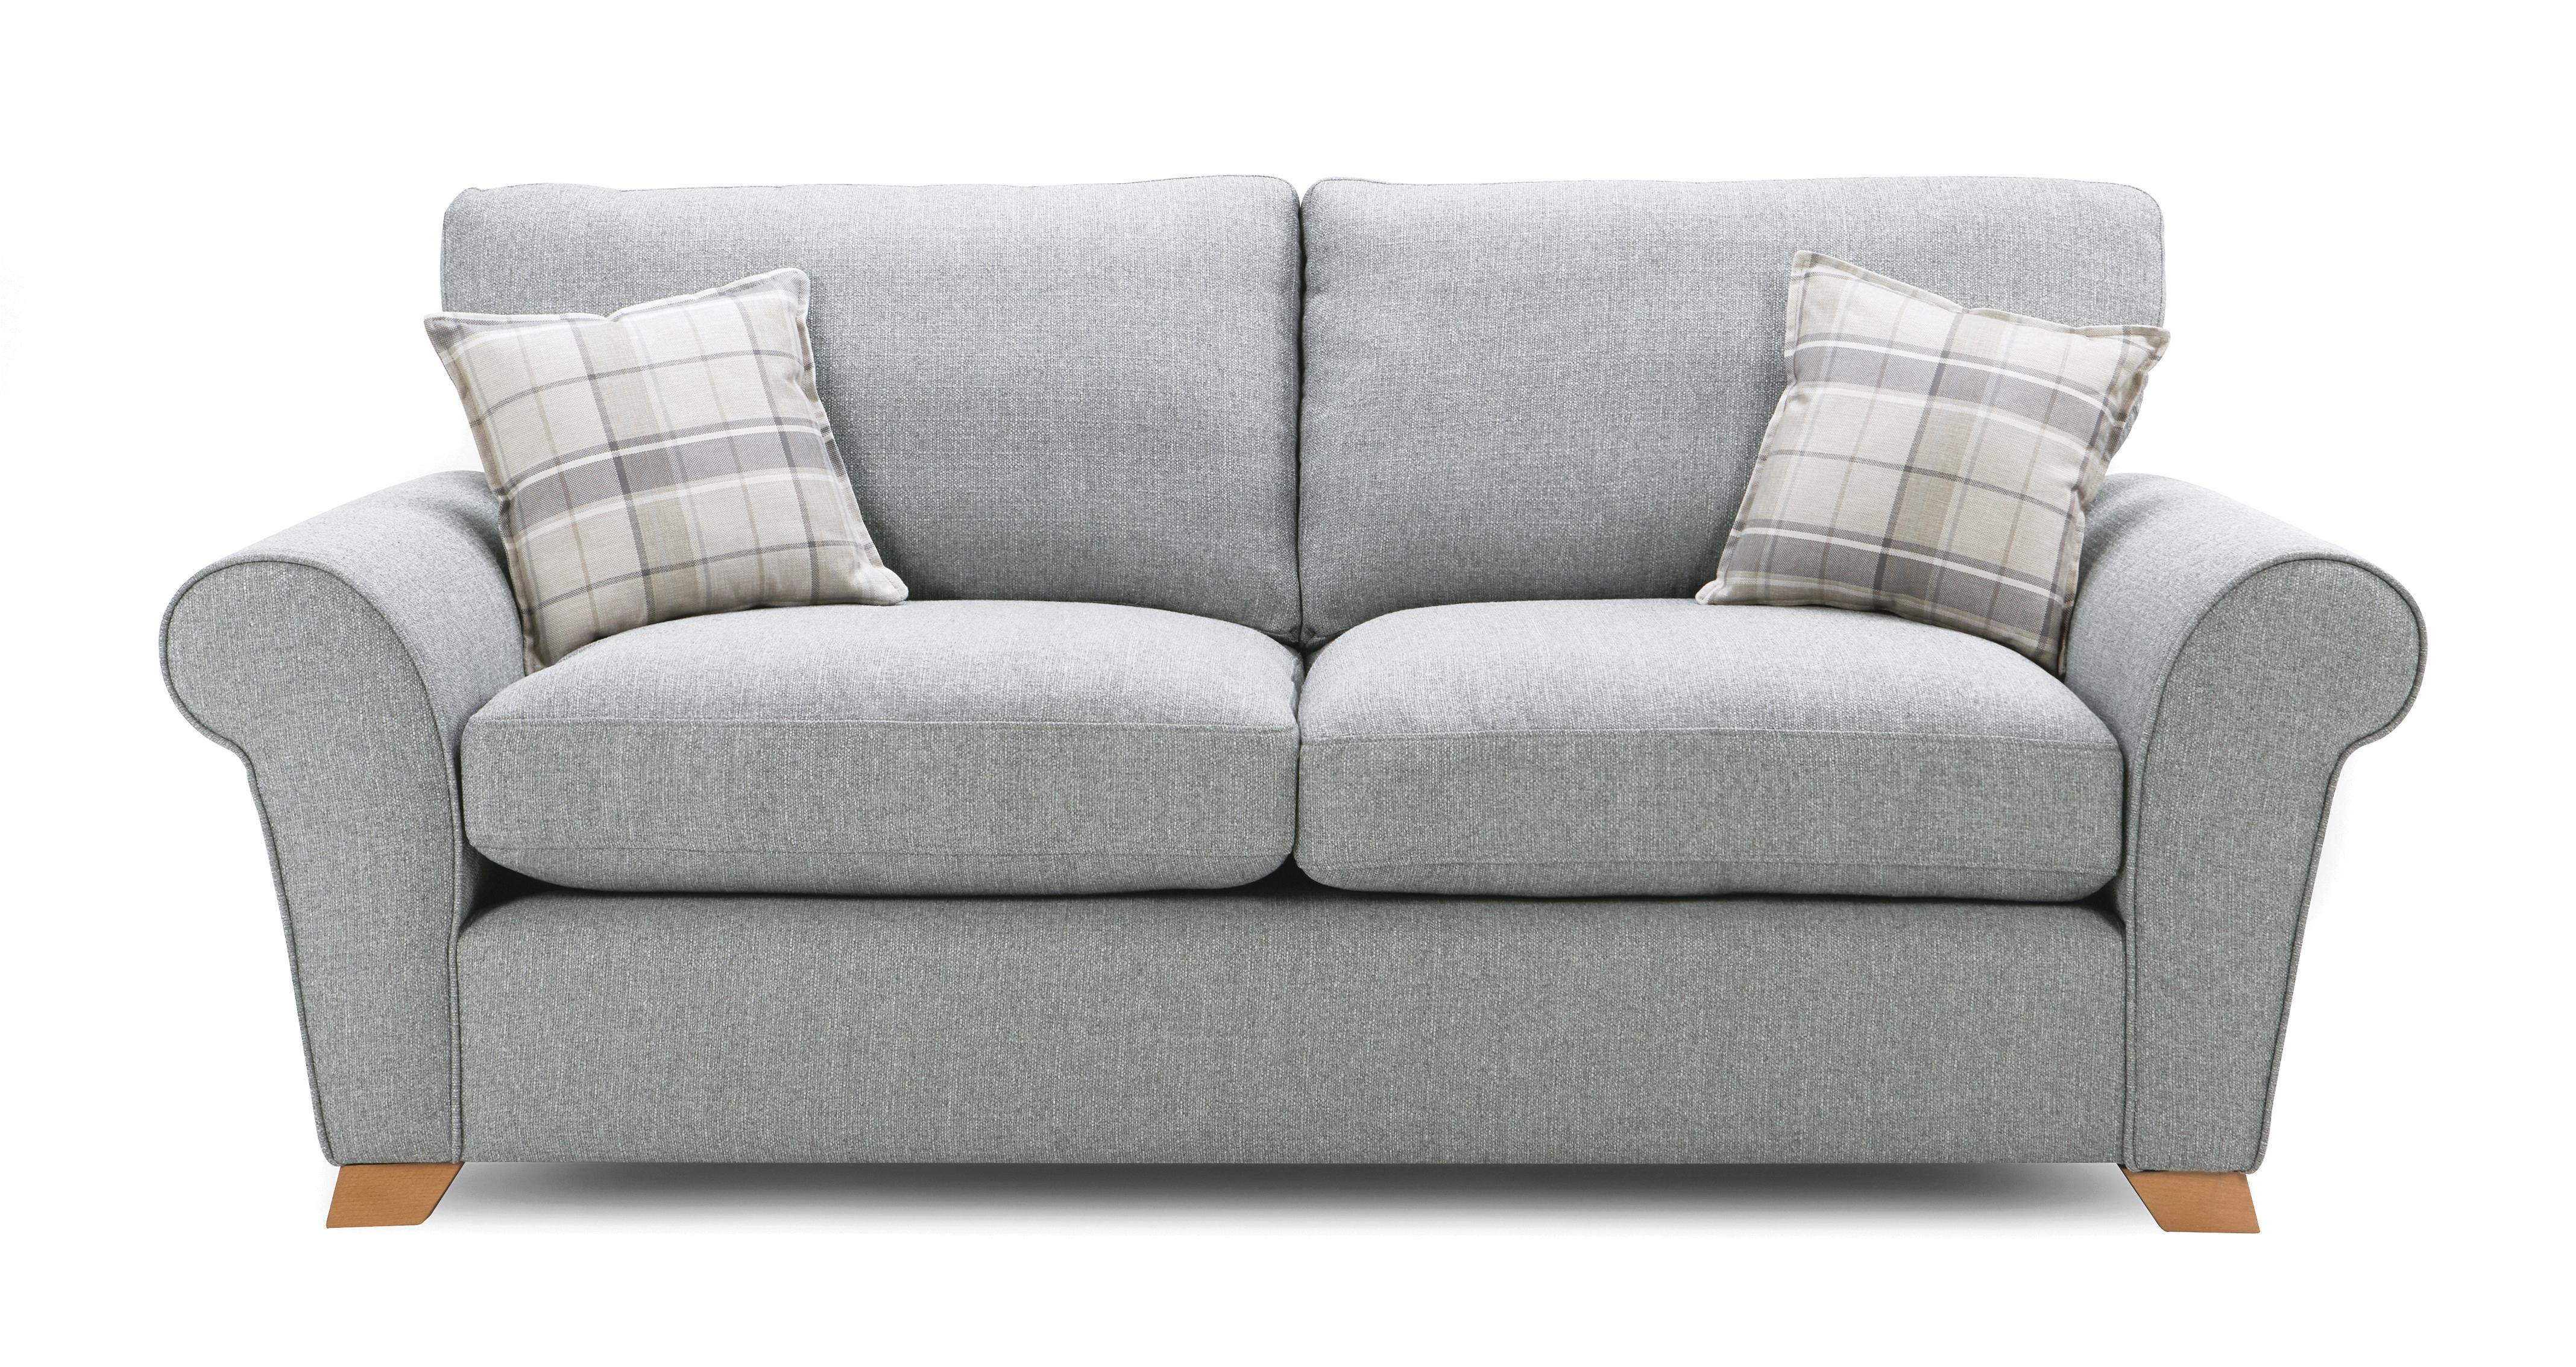 sofa beds clearance sale